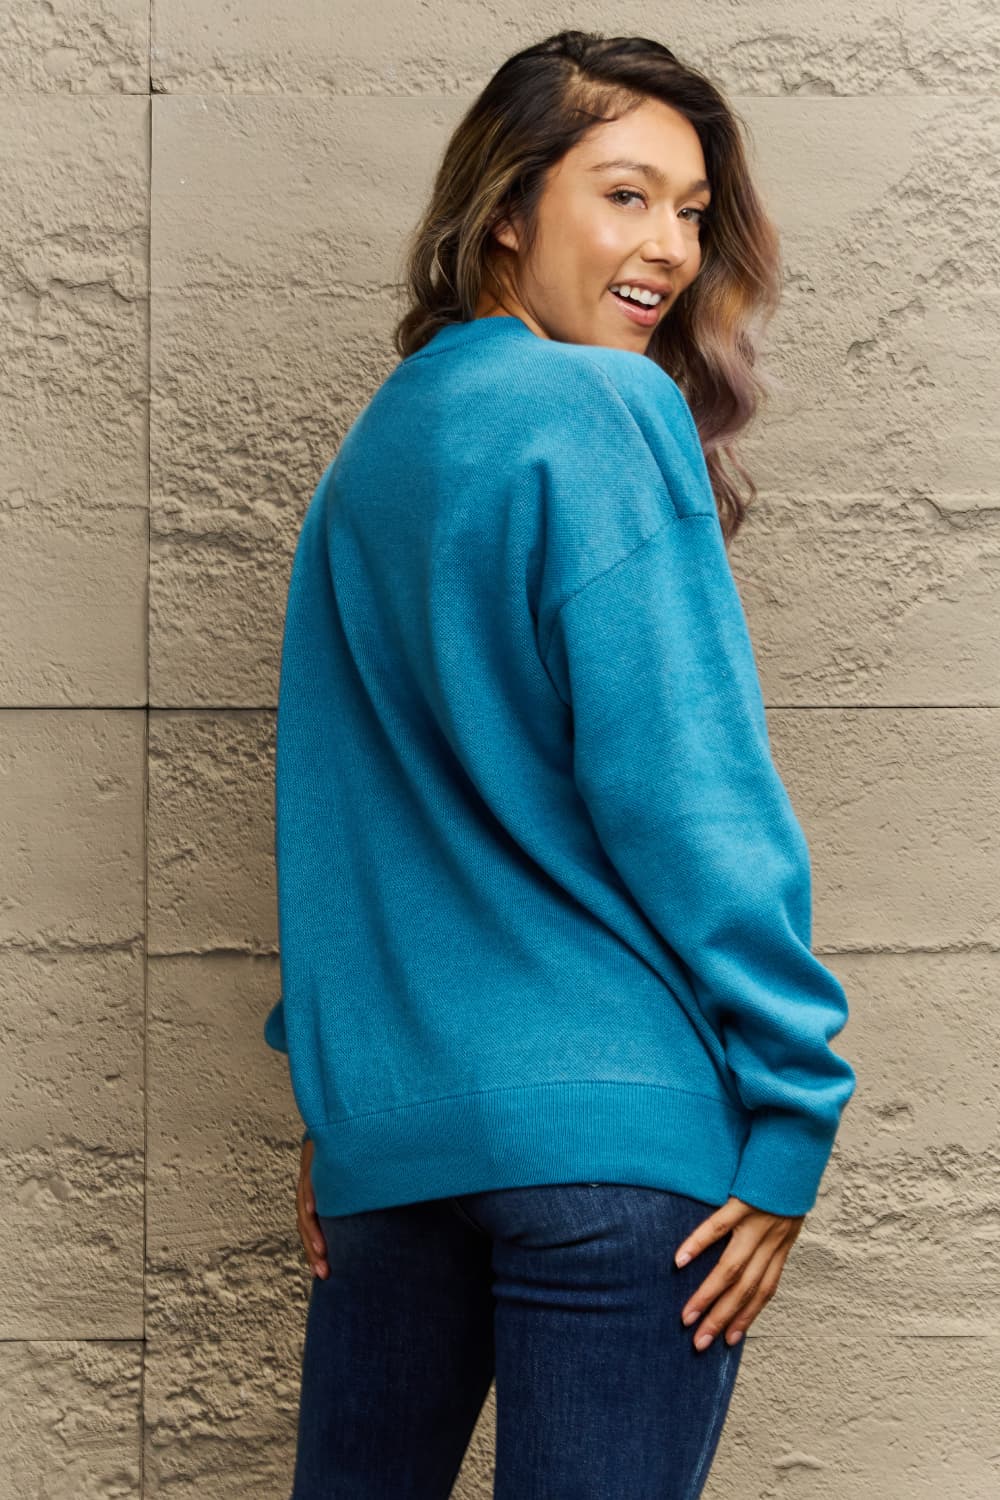 Woven Right Full Size Round Neck Graphic Sweater - TiffanyzKlozet